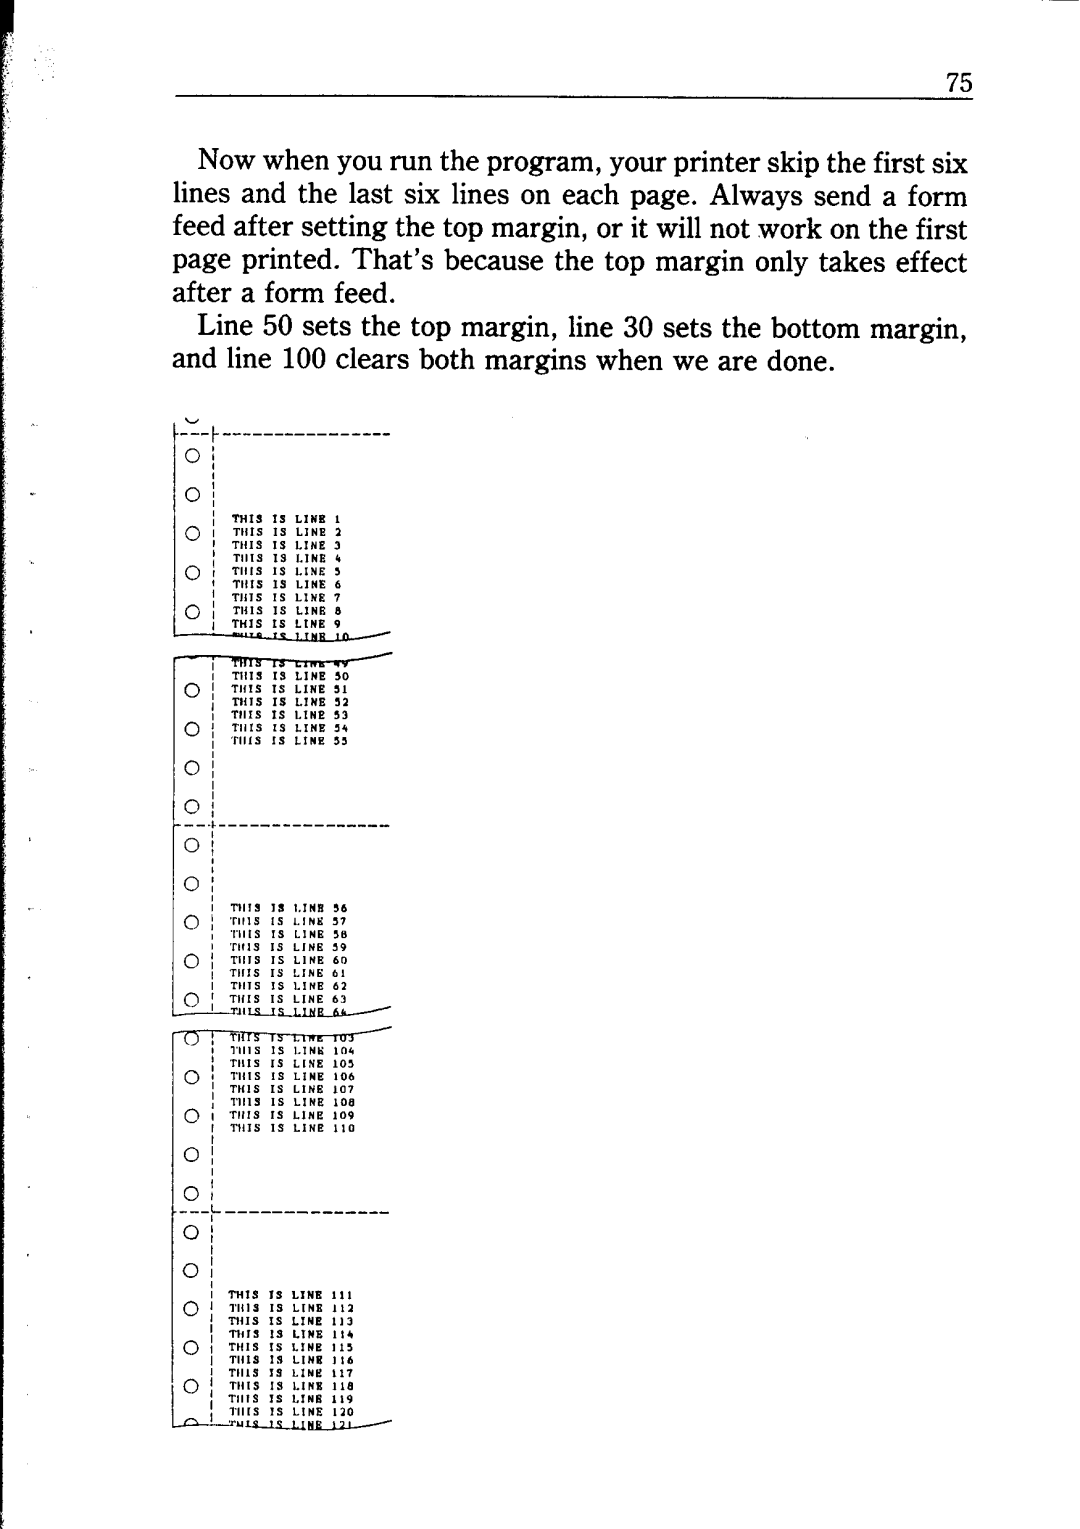 Star Micronics NB24-10/15 user manual 